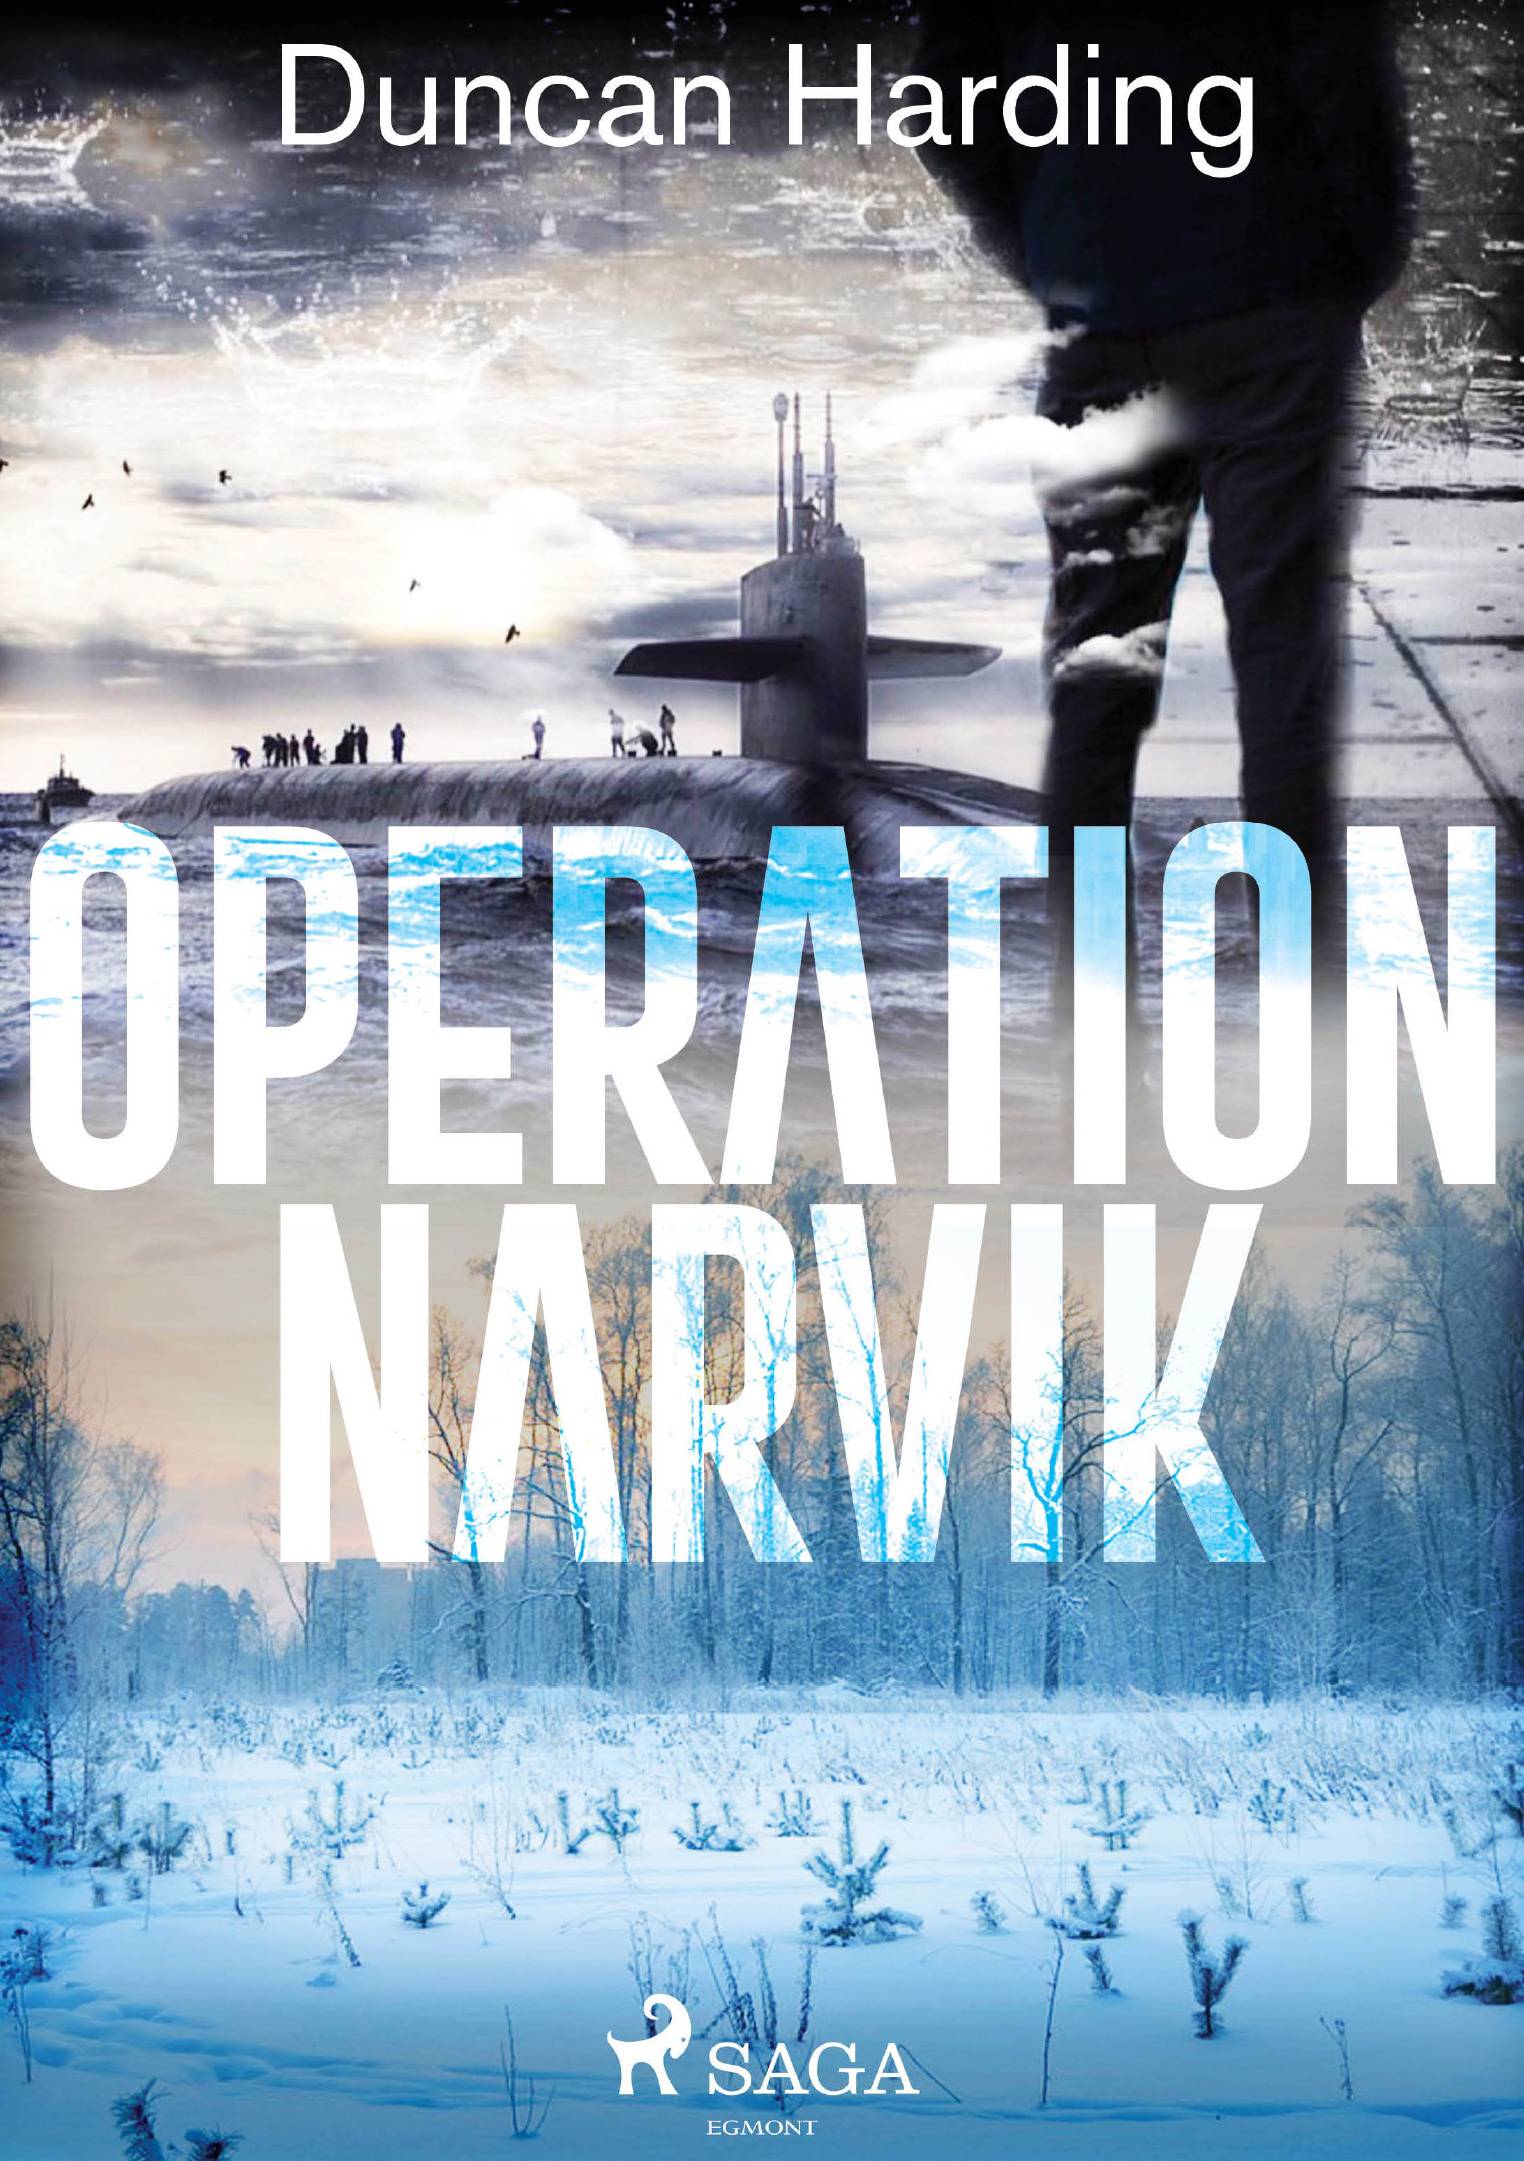 Operation Narvik